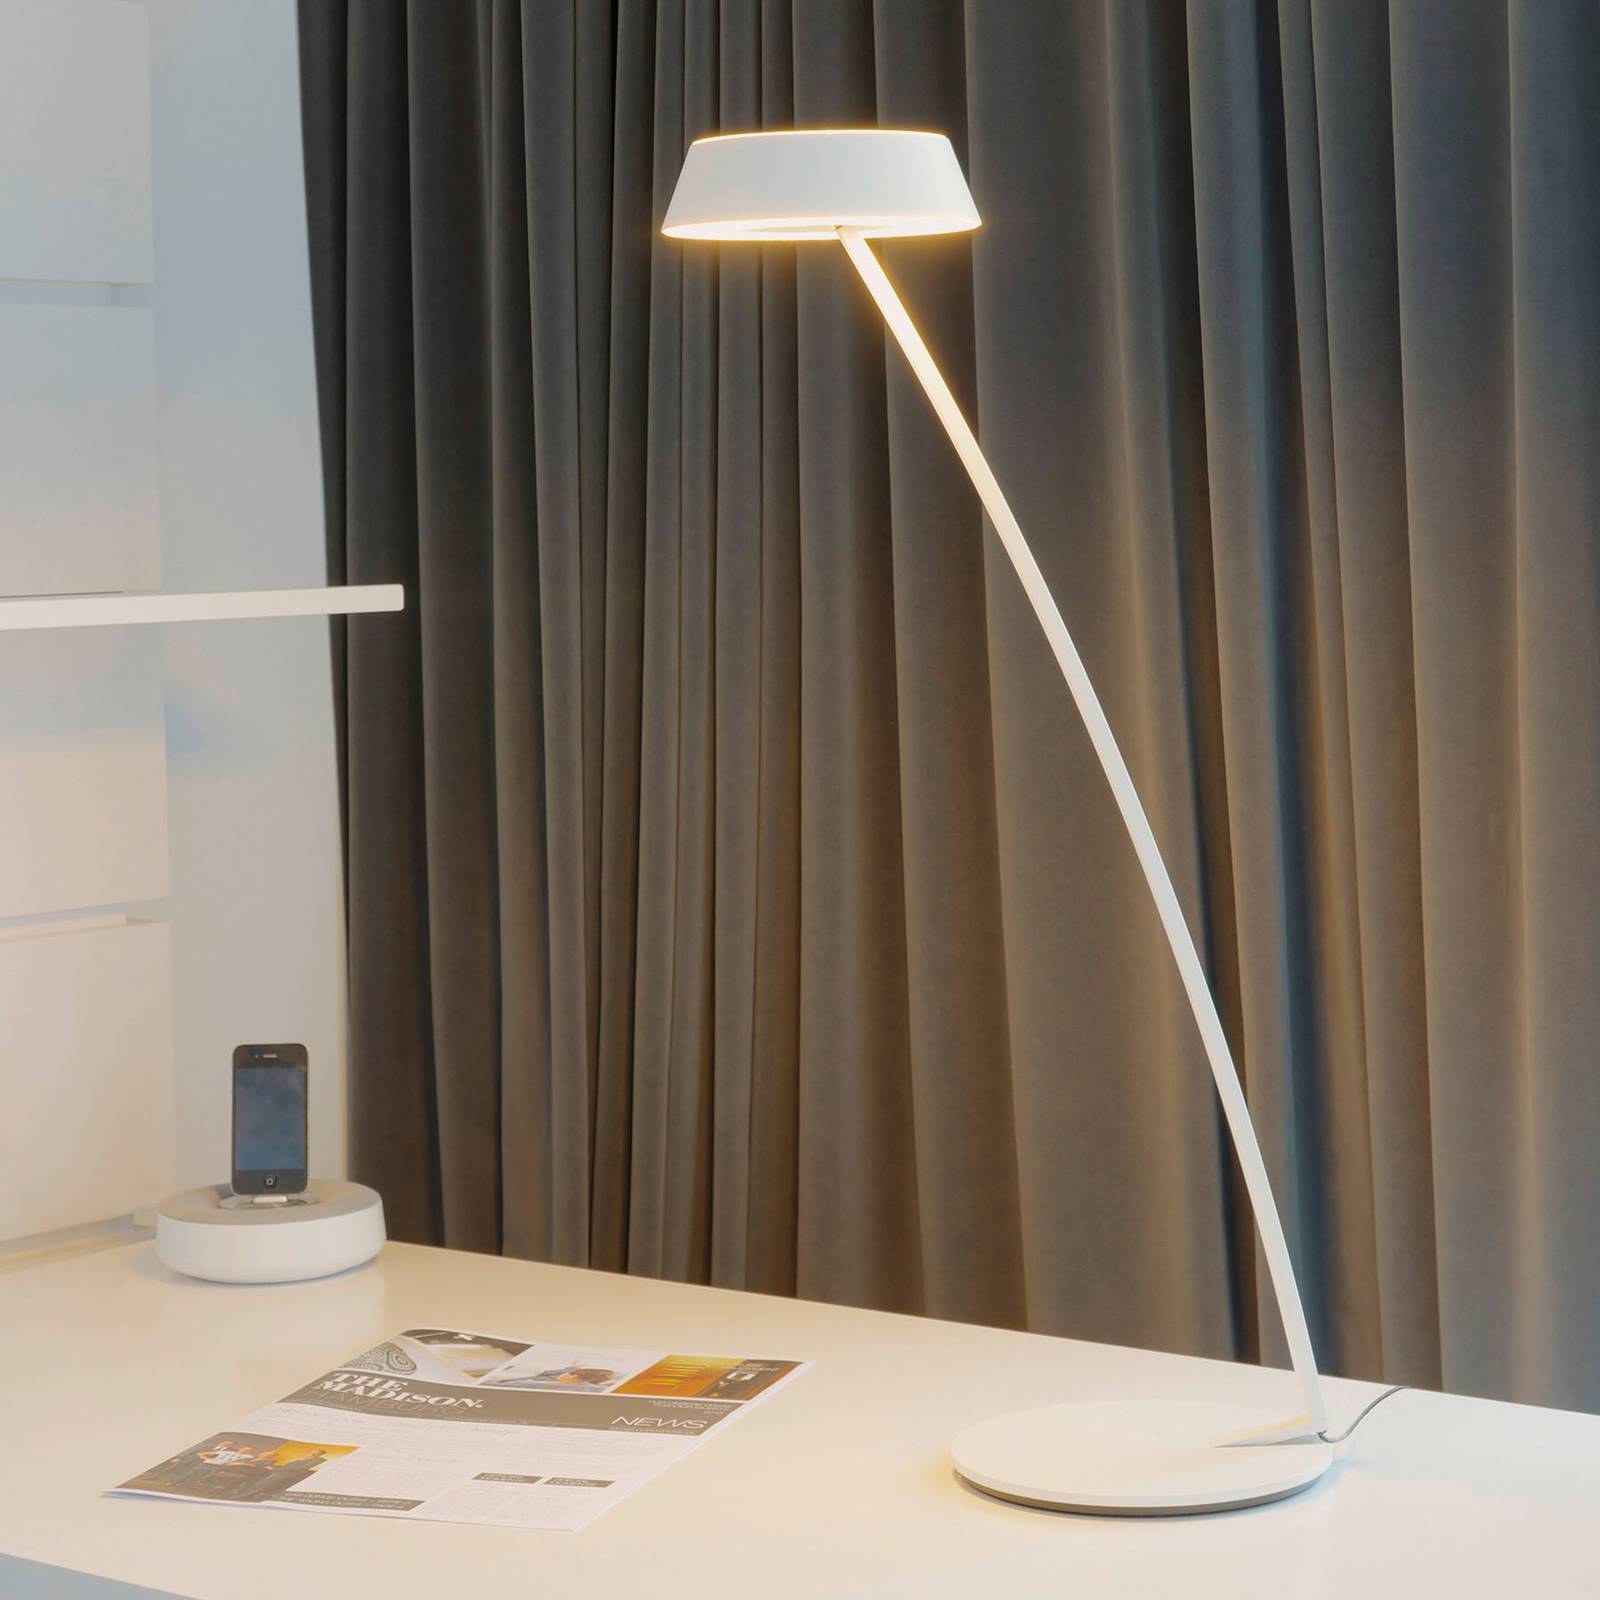 OLIGO Glance lampe à poser LED arquée blanche mate